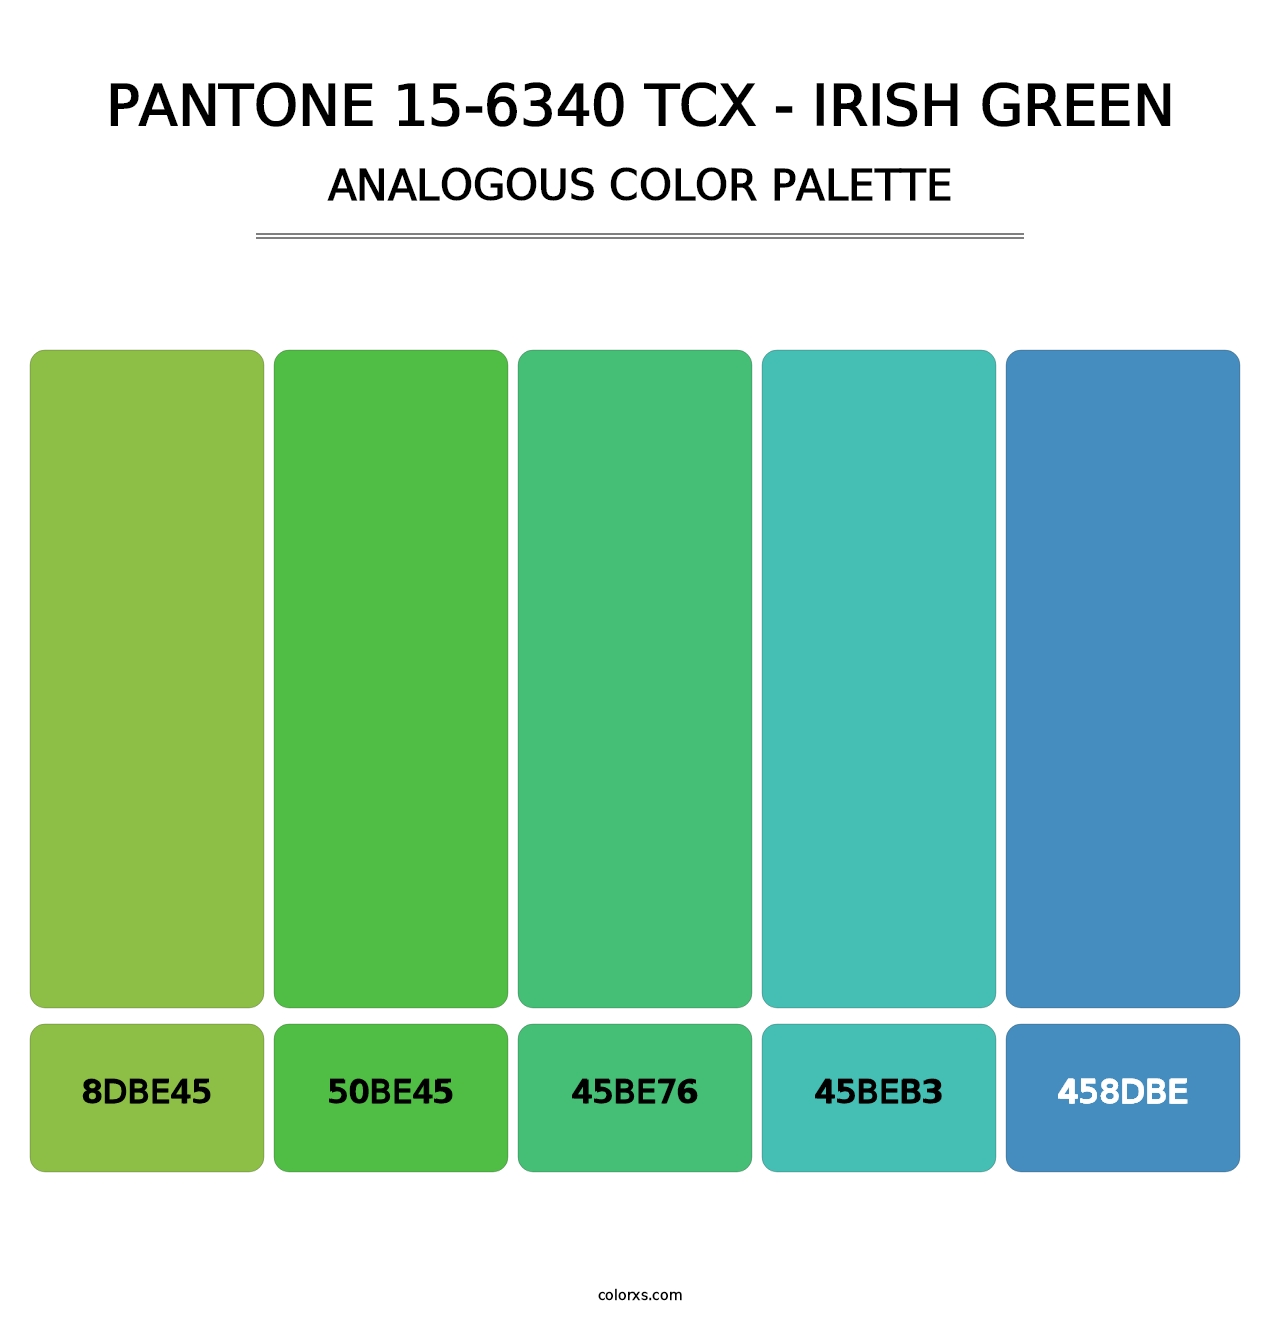 PANTONE 15-6340 TCX - Irish Green - Analogous Color Palette